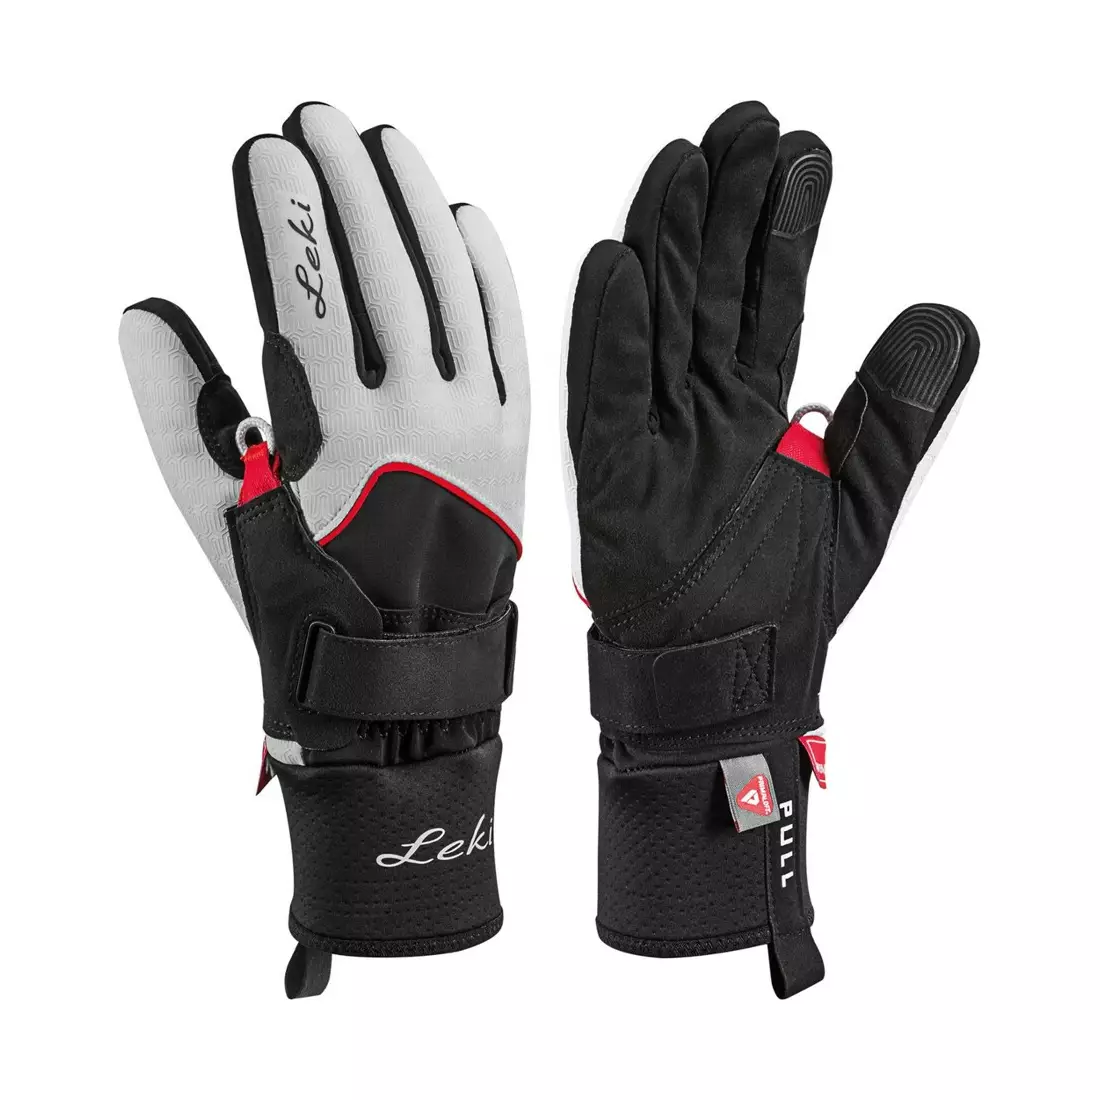 LEKI women's winter gloves NORDIC THERMO LADY grey/black 643912201085